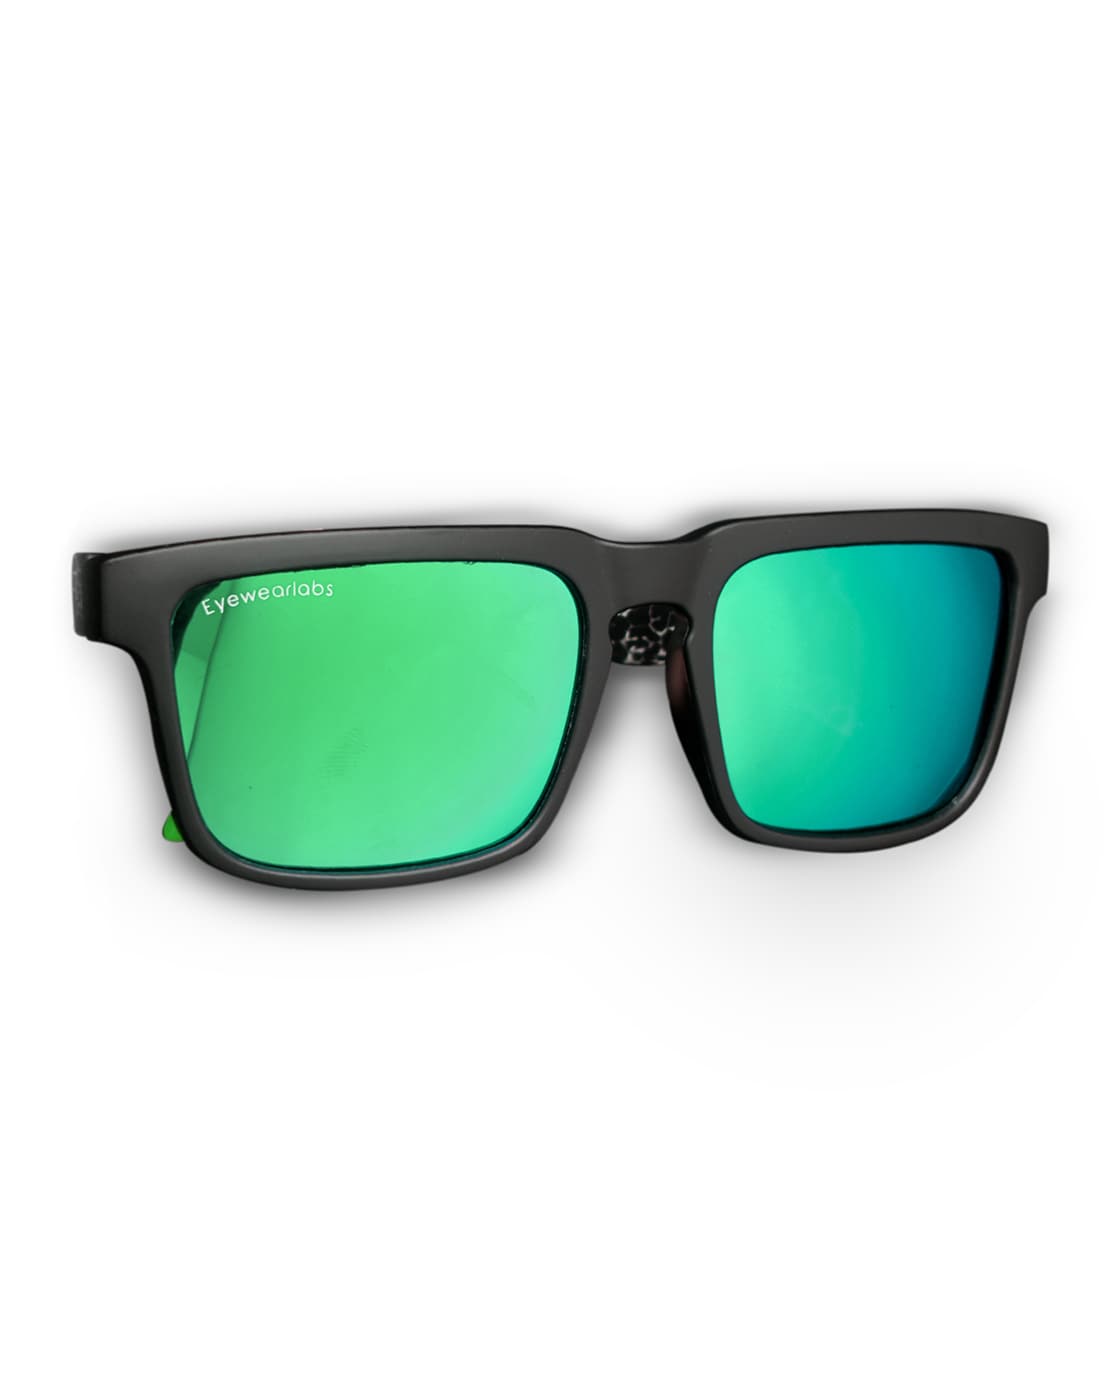 Buy Green Sunglasses for Men by Eyewearlabs Online 